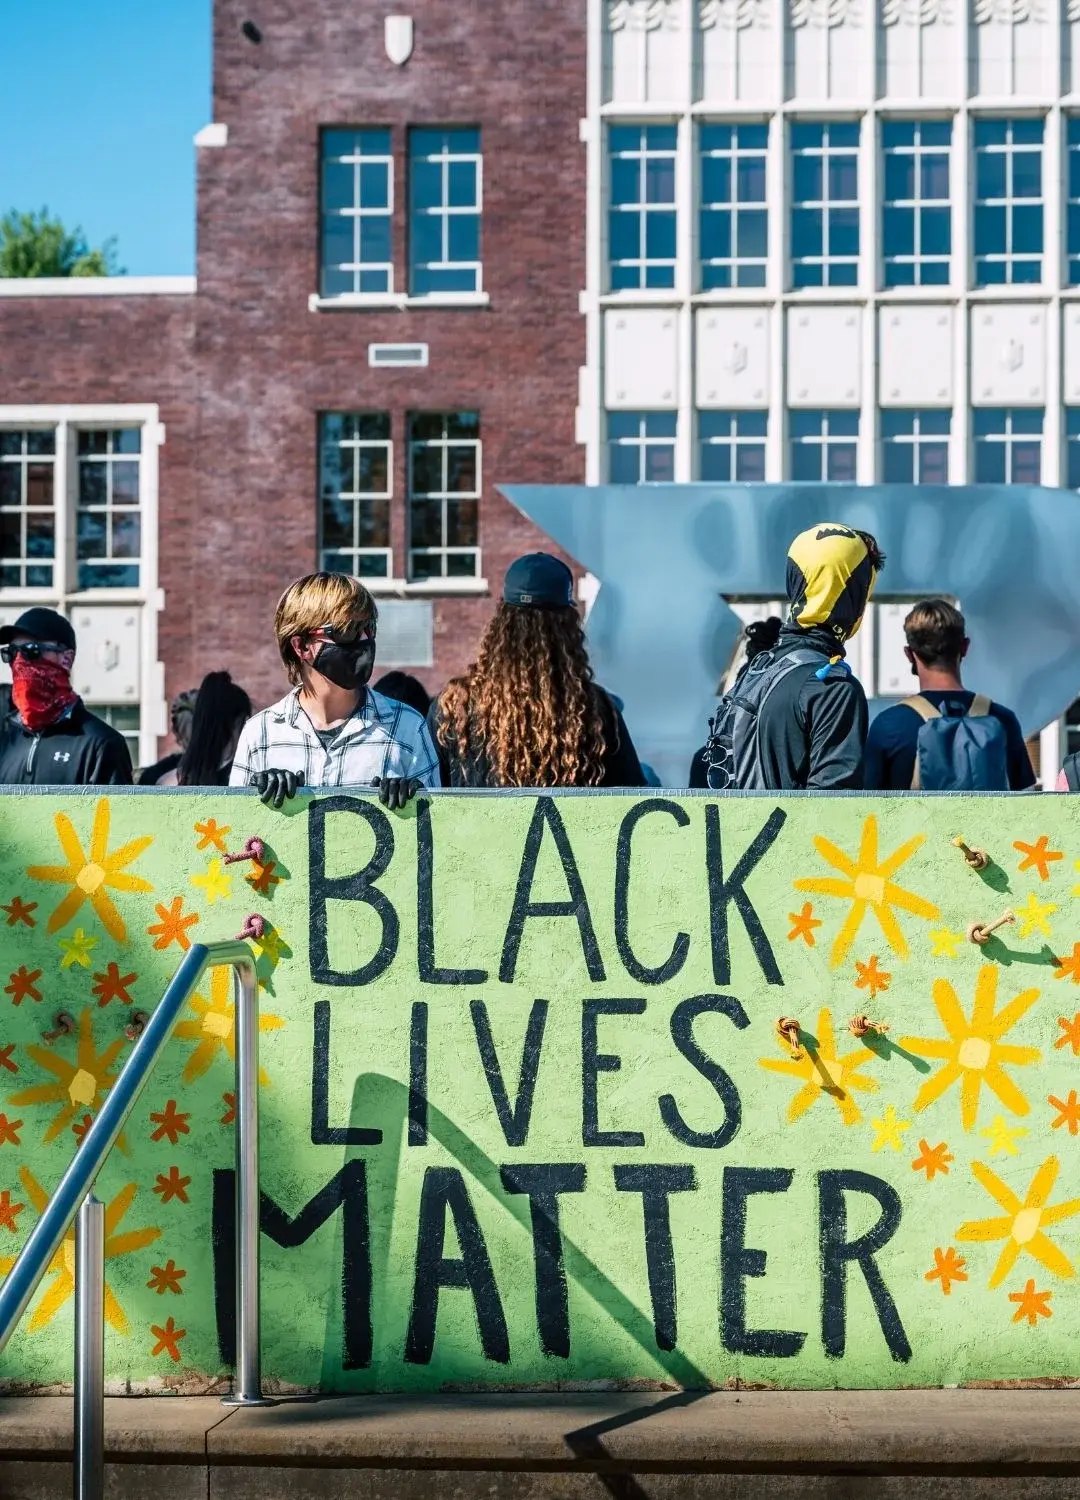 Zielony transparent z napisem "Black Lives Matter" przed osobami protestującymi na tle budynku